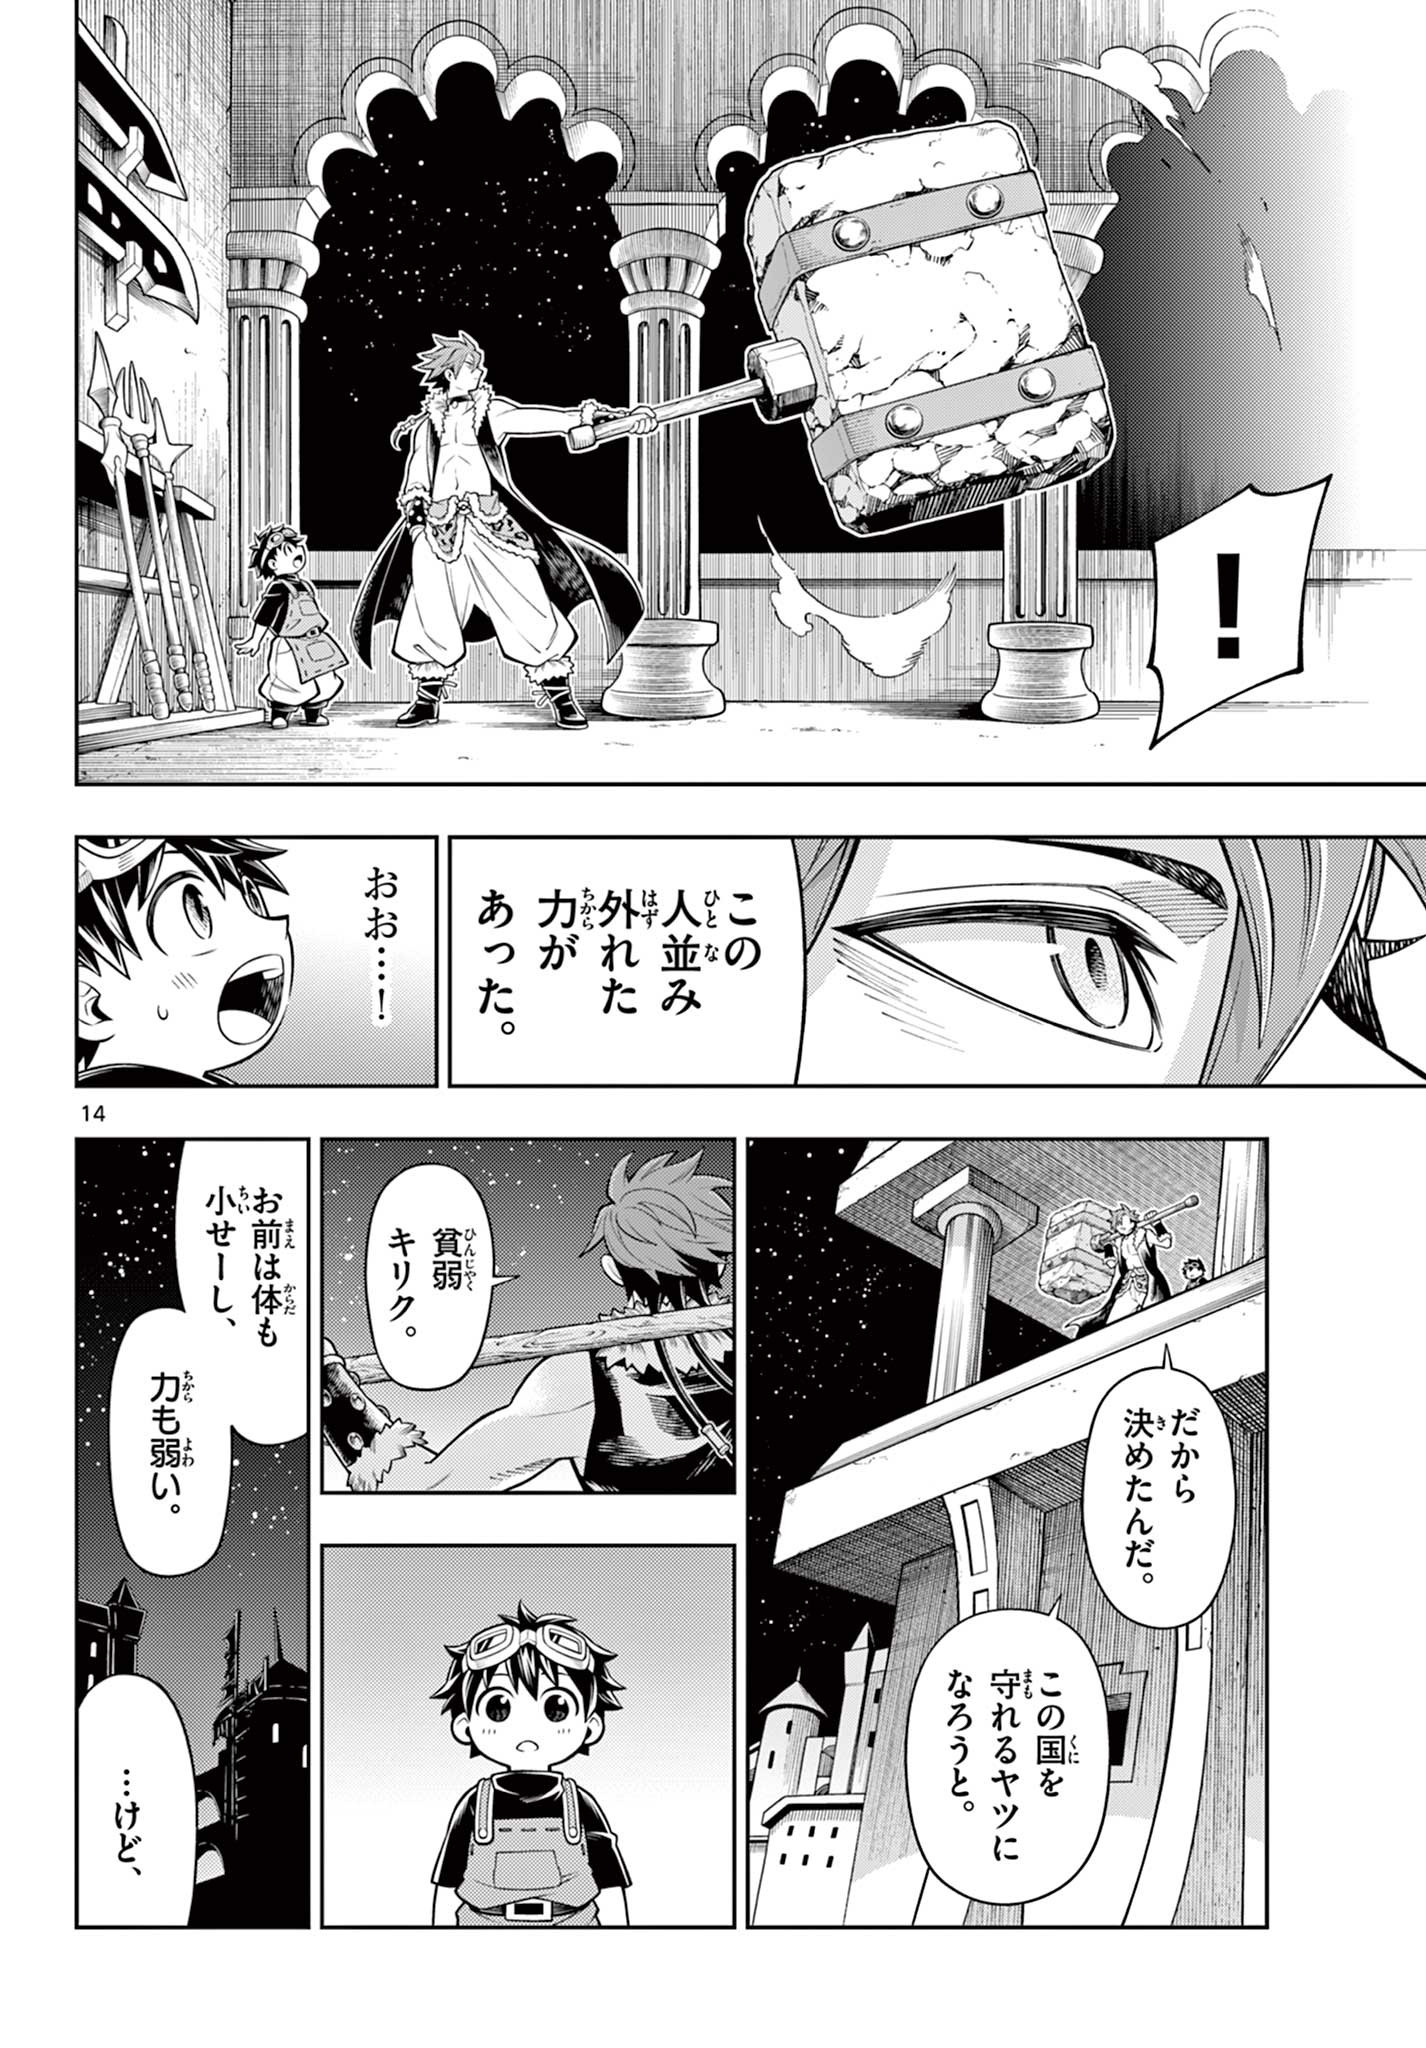 Soara to Mamono no ie - Chapter 23 - Page 14